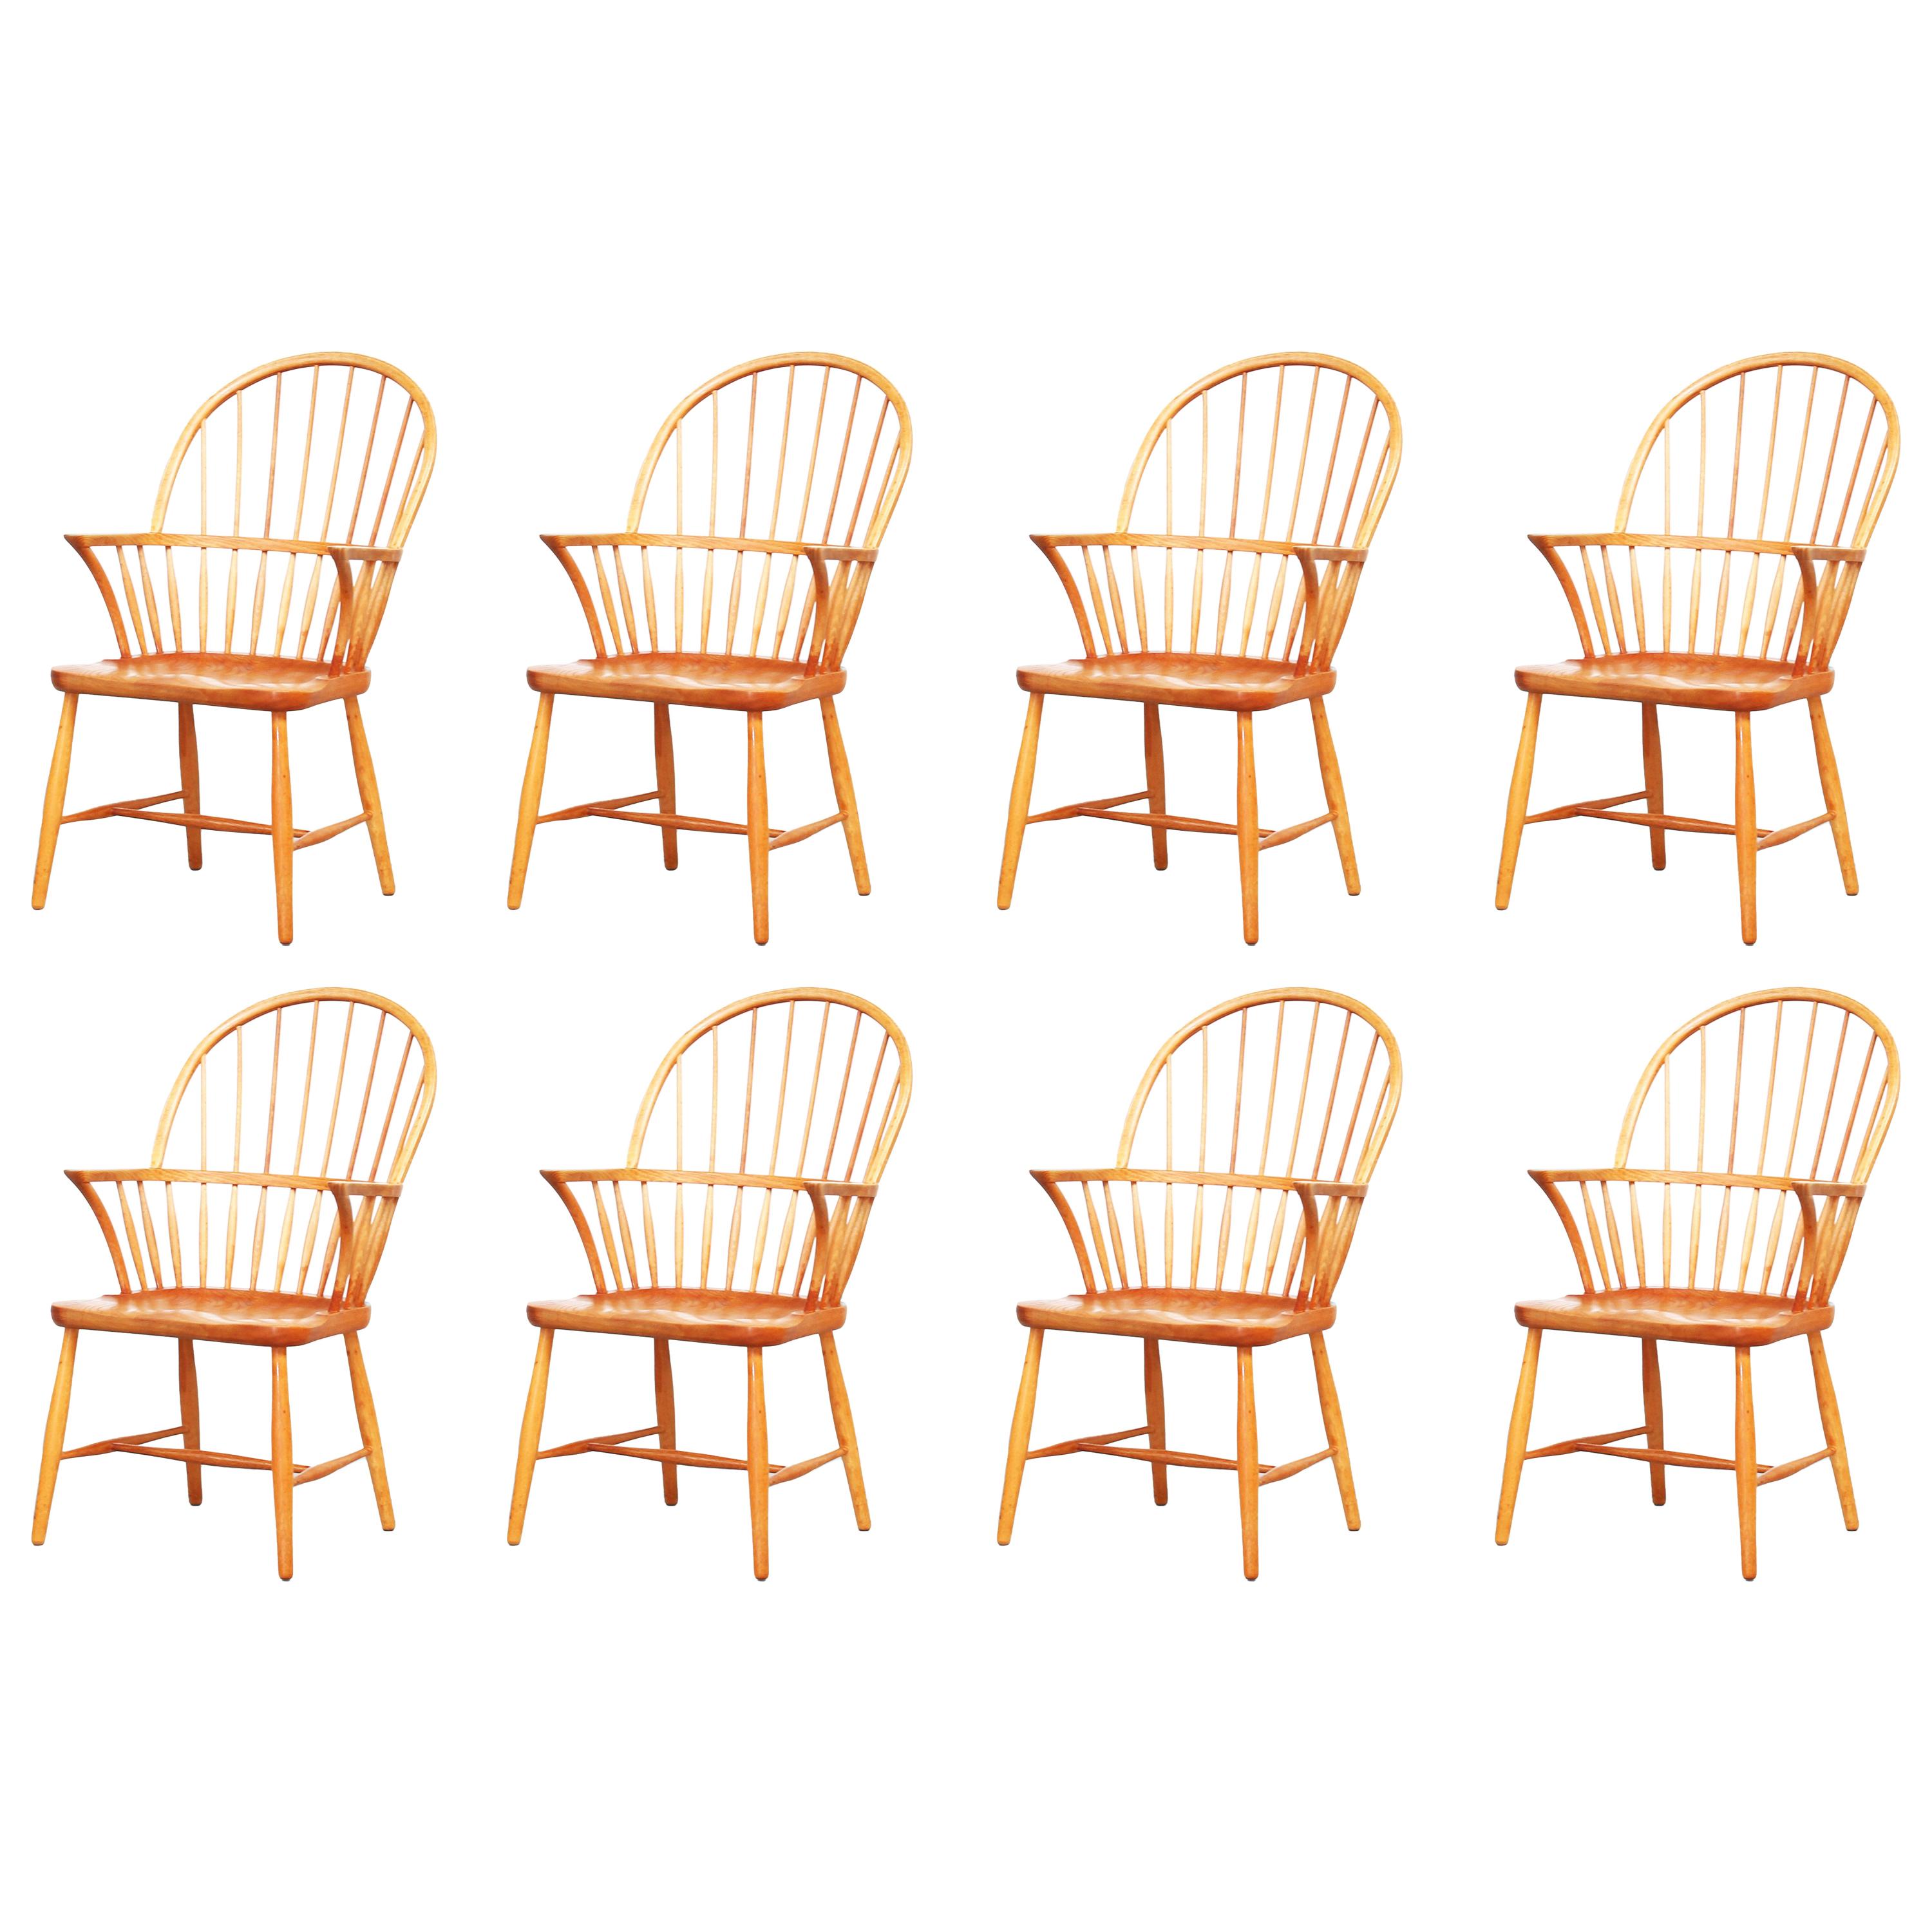 Set of Eight Oak Windsor Dining Chairs by Frits Henningsen 1940s, Denmark